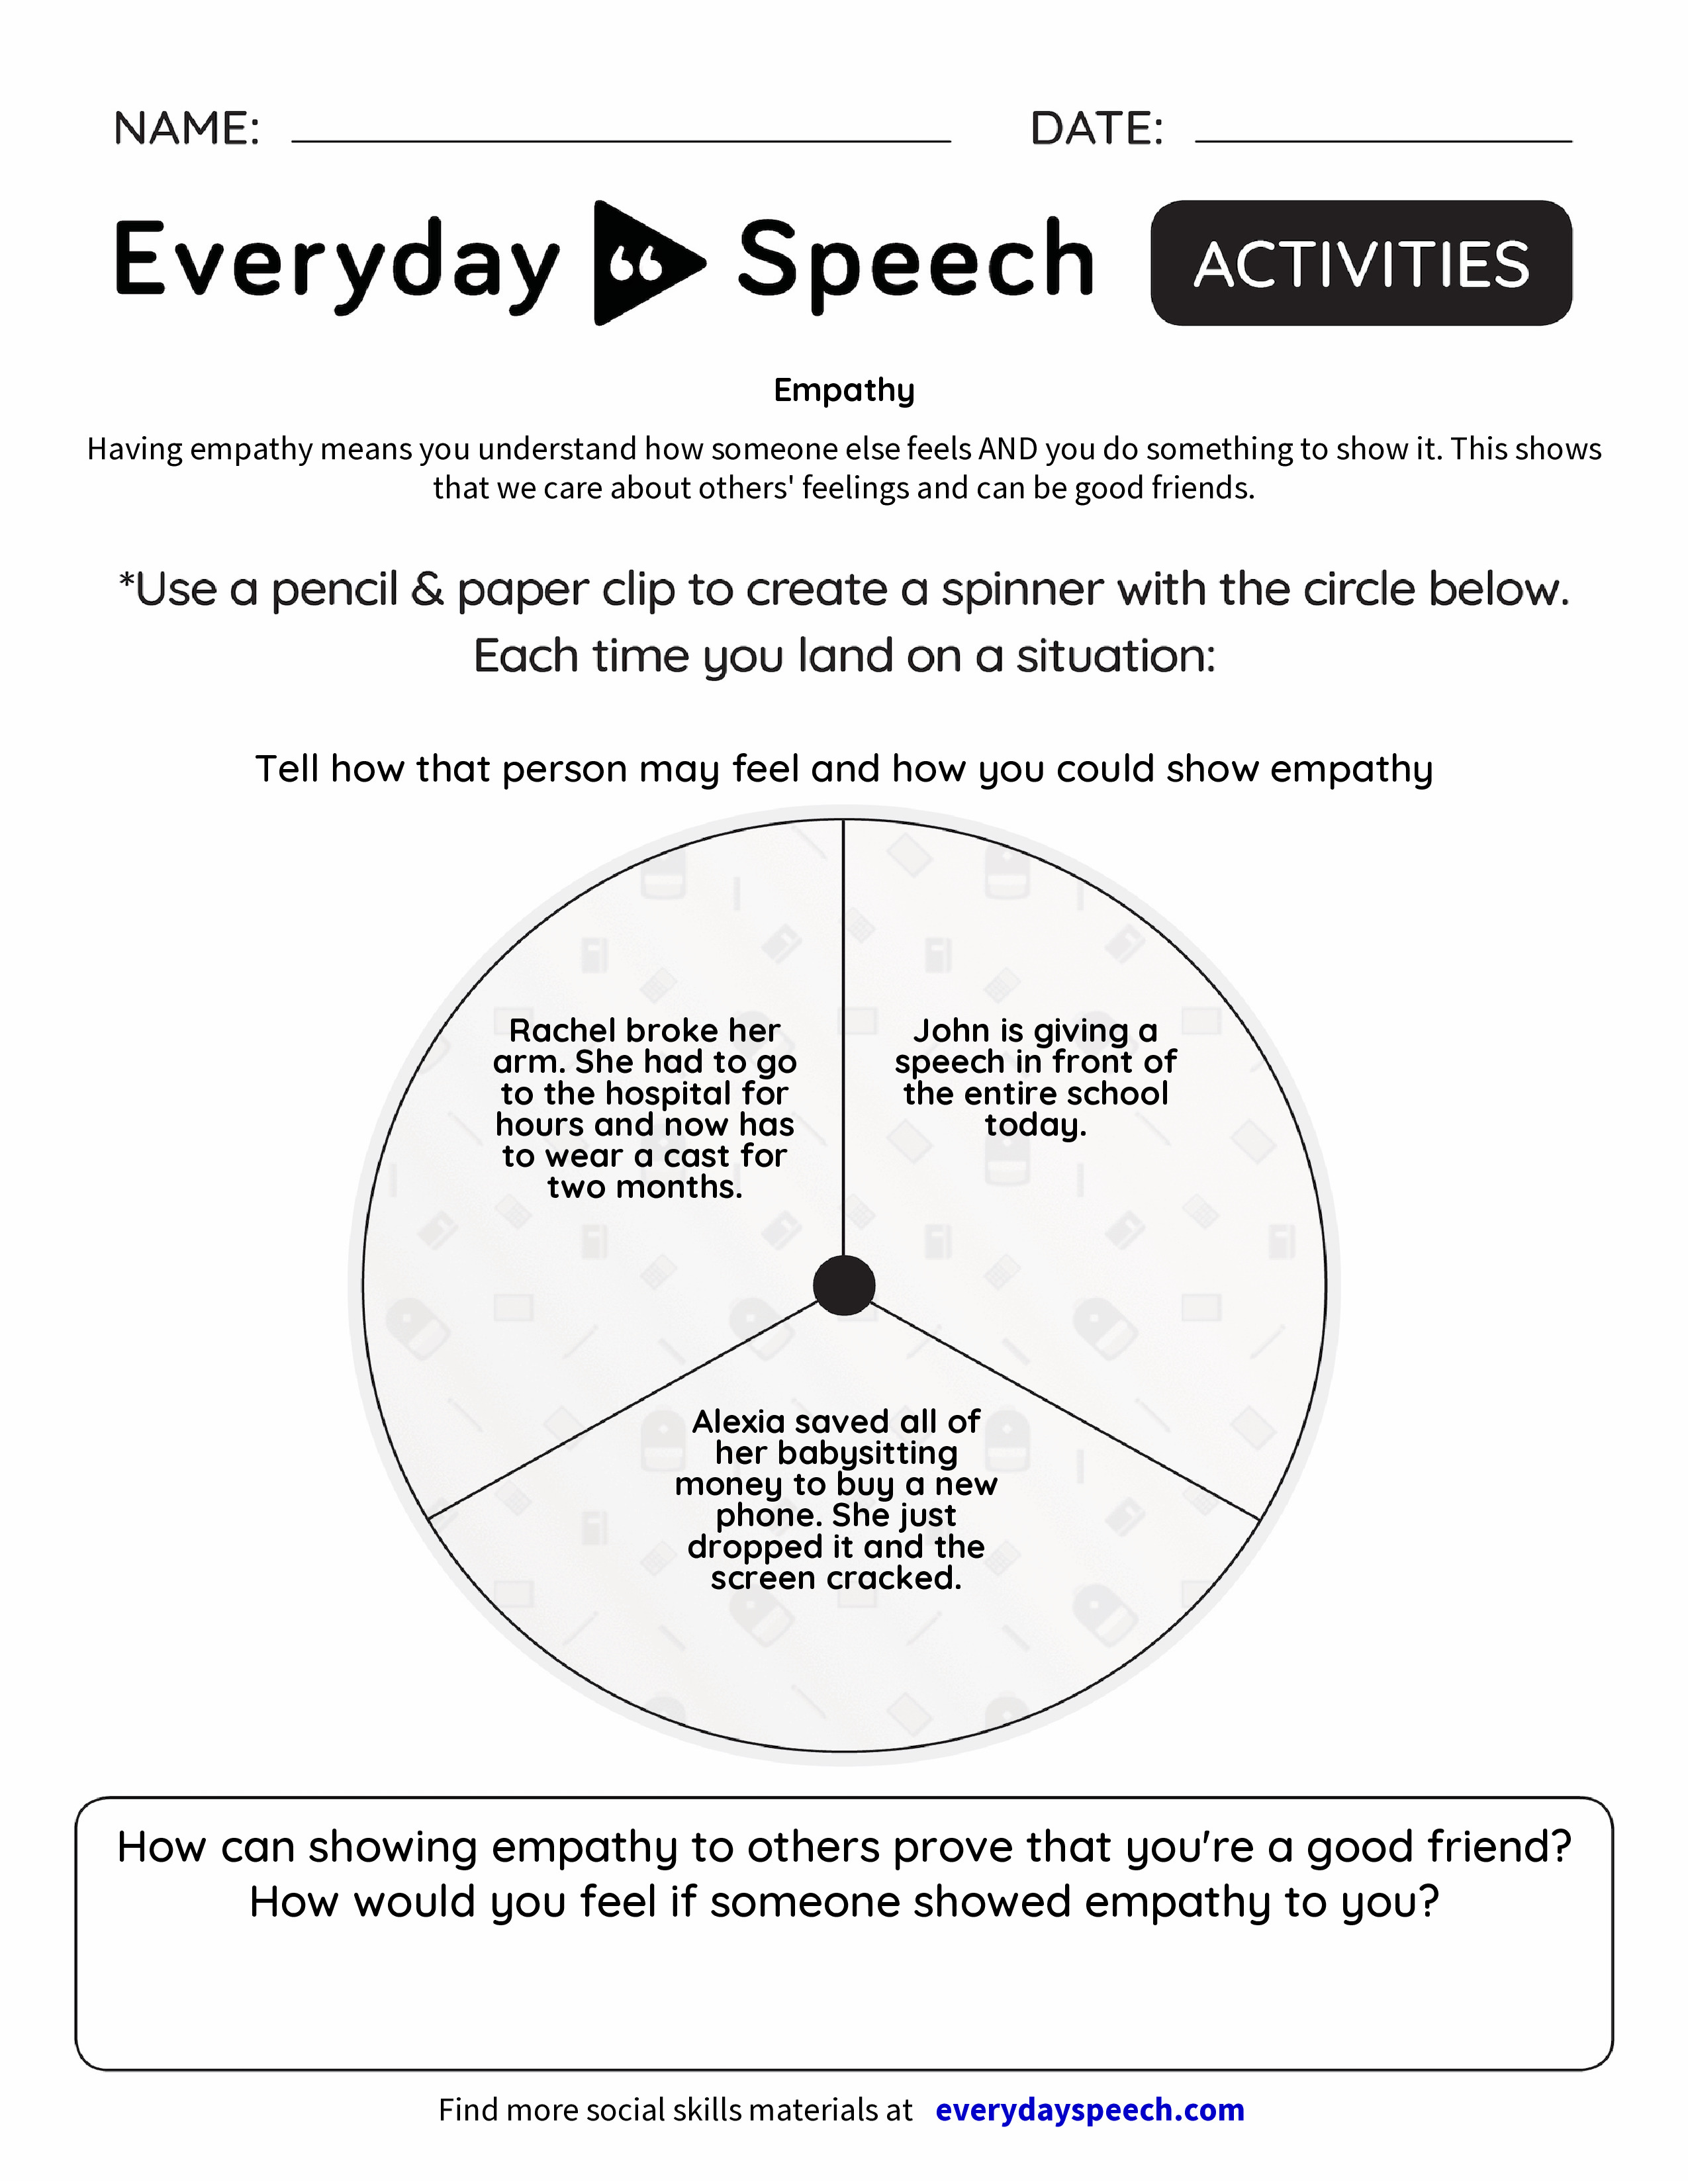 empathy-everyday-speech-everyday-speech